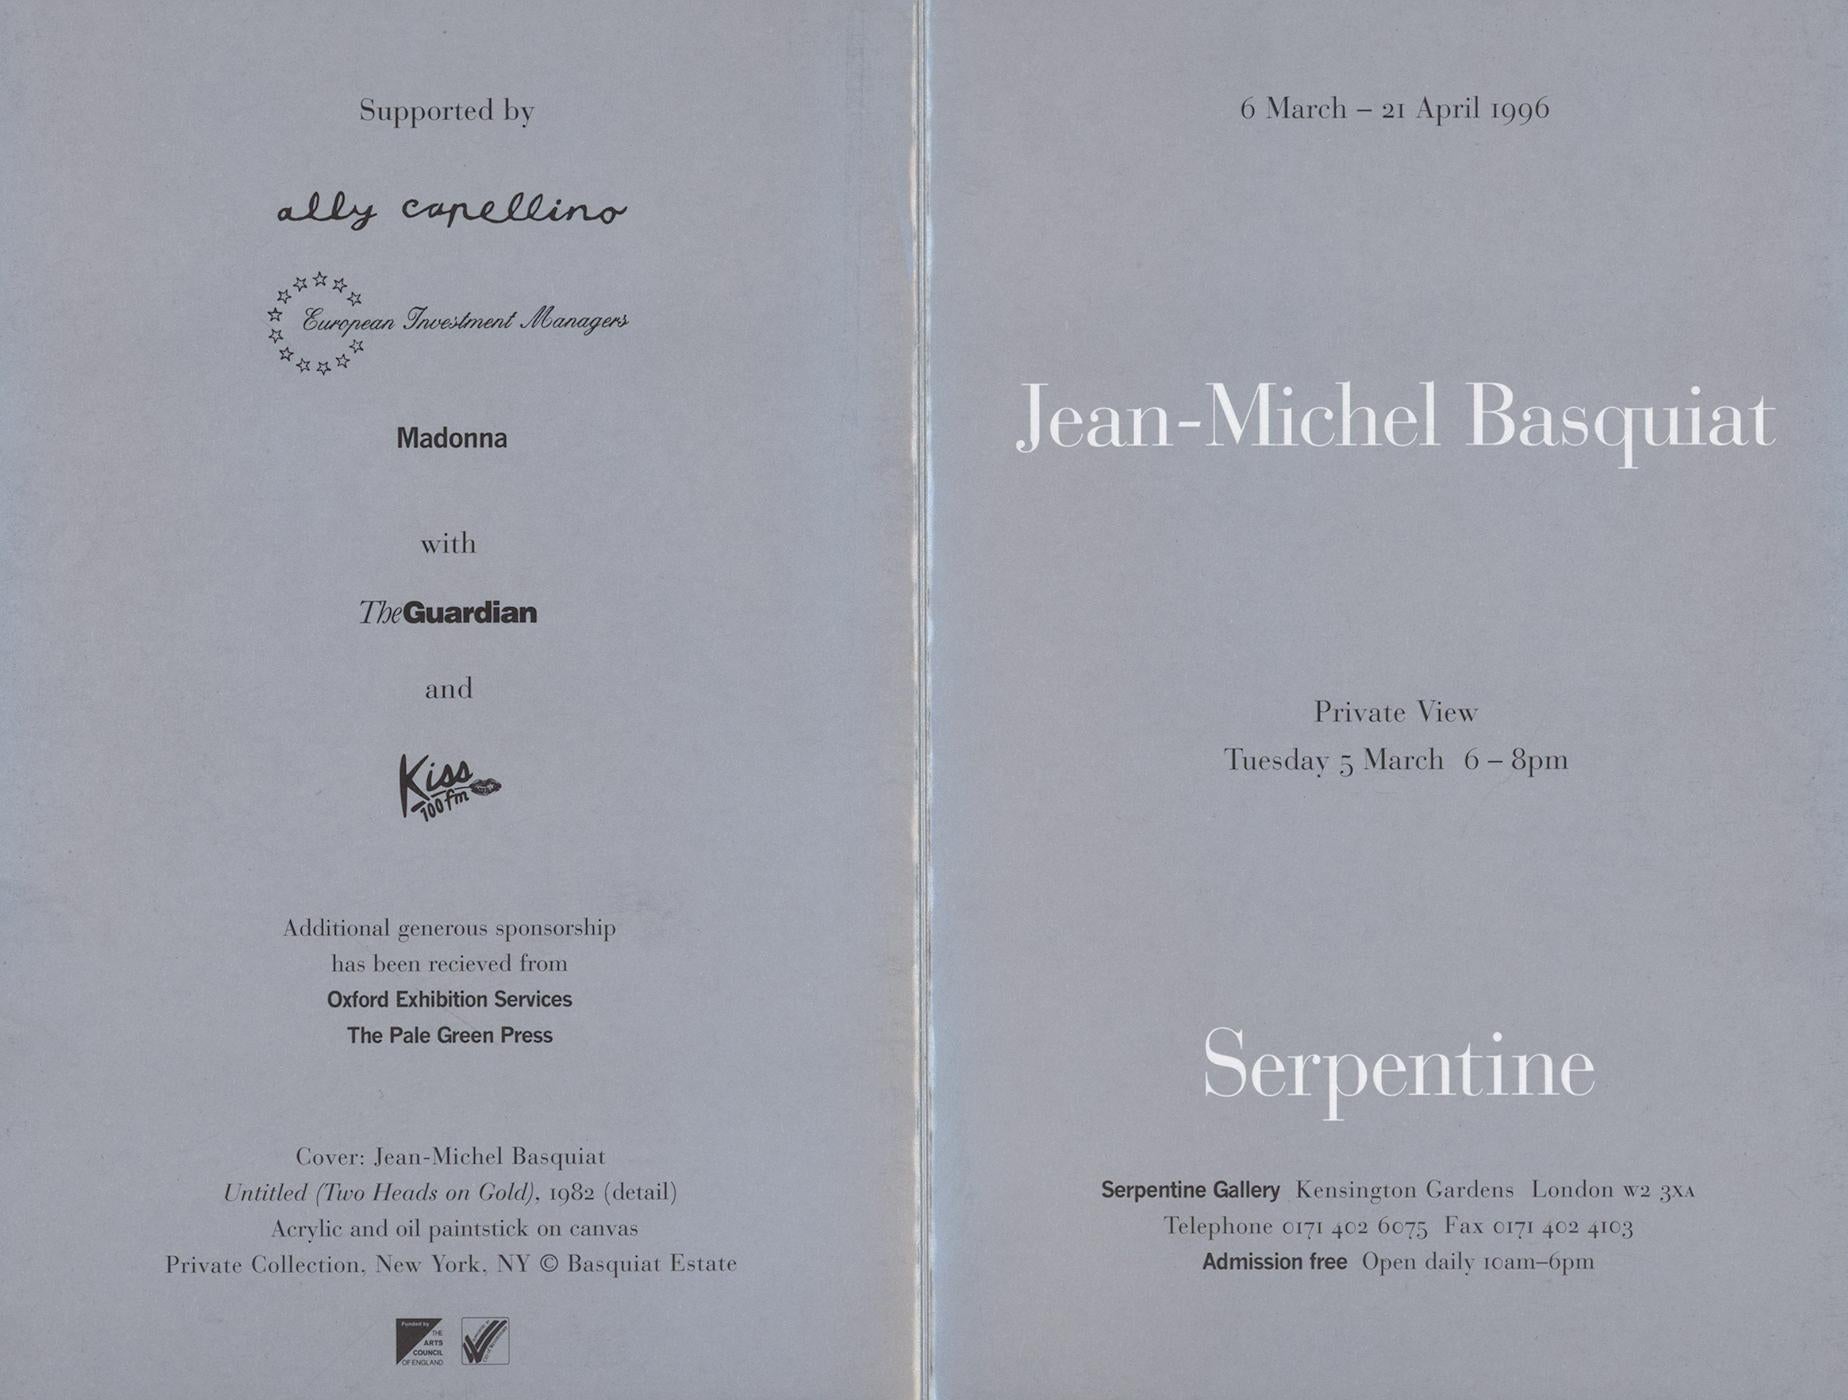 Basquiat Serpentine Gallery 1996 (announcement)  - Print by after Jean-Michel Basquiat